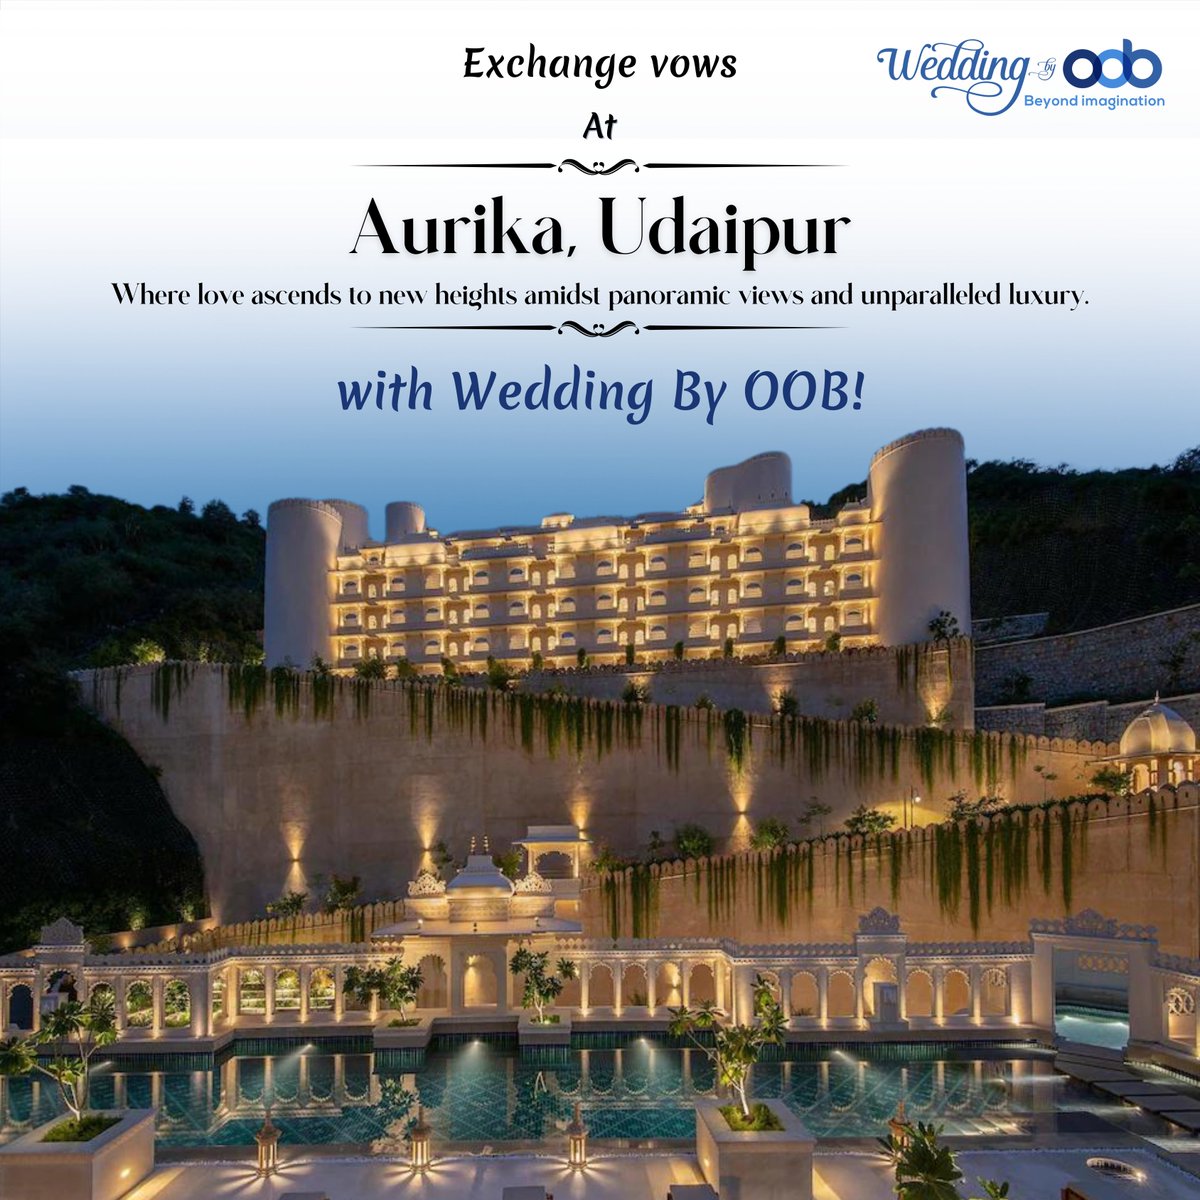 𝐃𝐢𝐬𝐜𝐨𝐯𝐞𝐫 𝐭𝐡𝐞 𝐩𝐞𝐫𝐟𝐞𝐜𝐭 𝐬𝐞𝐭𝐭𝐢𝐧𝐠 𝐟𝐨𝐫 𝐲𝐨𝐮𝐫 𝐬𝐩𝐞𝐜𝐢𝐚𝐥 𝐝𝐚𝐲 𝐚𝐭 𝐀𝐮𝐫𝐢𝐤𝐚 𝐰𝐢𝐭𝐡 𝐖𝐞𝐝𝐝𝐢𝐧𝐠 𝐁𝐲 𝐎𝐎𝐁! 

 #weddinginspiration #weddingplanner #weddingplanning #aurikaudaipur  #weddingplannersindia